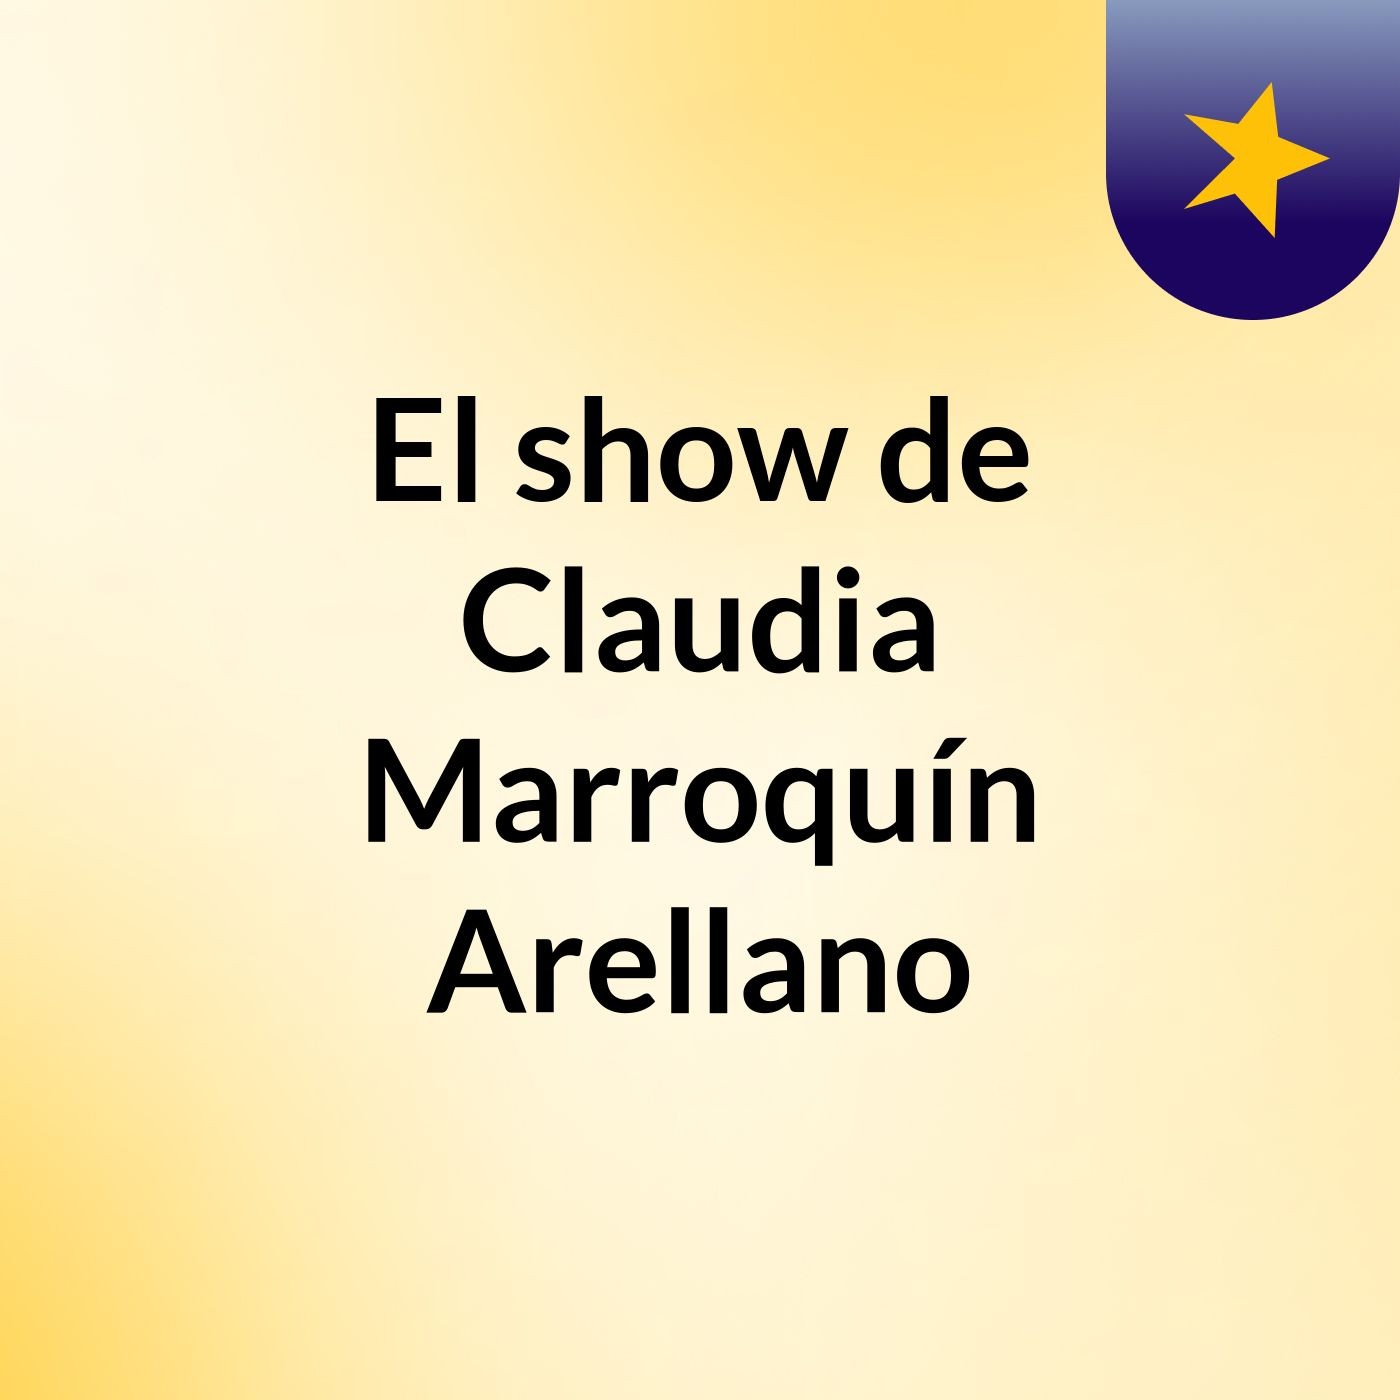 El show de Claudia Marroquín Arellano